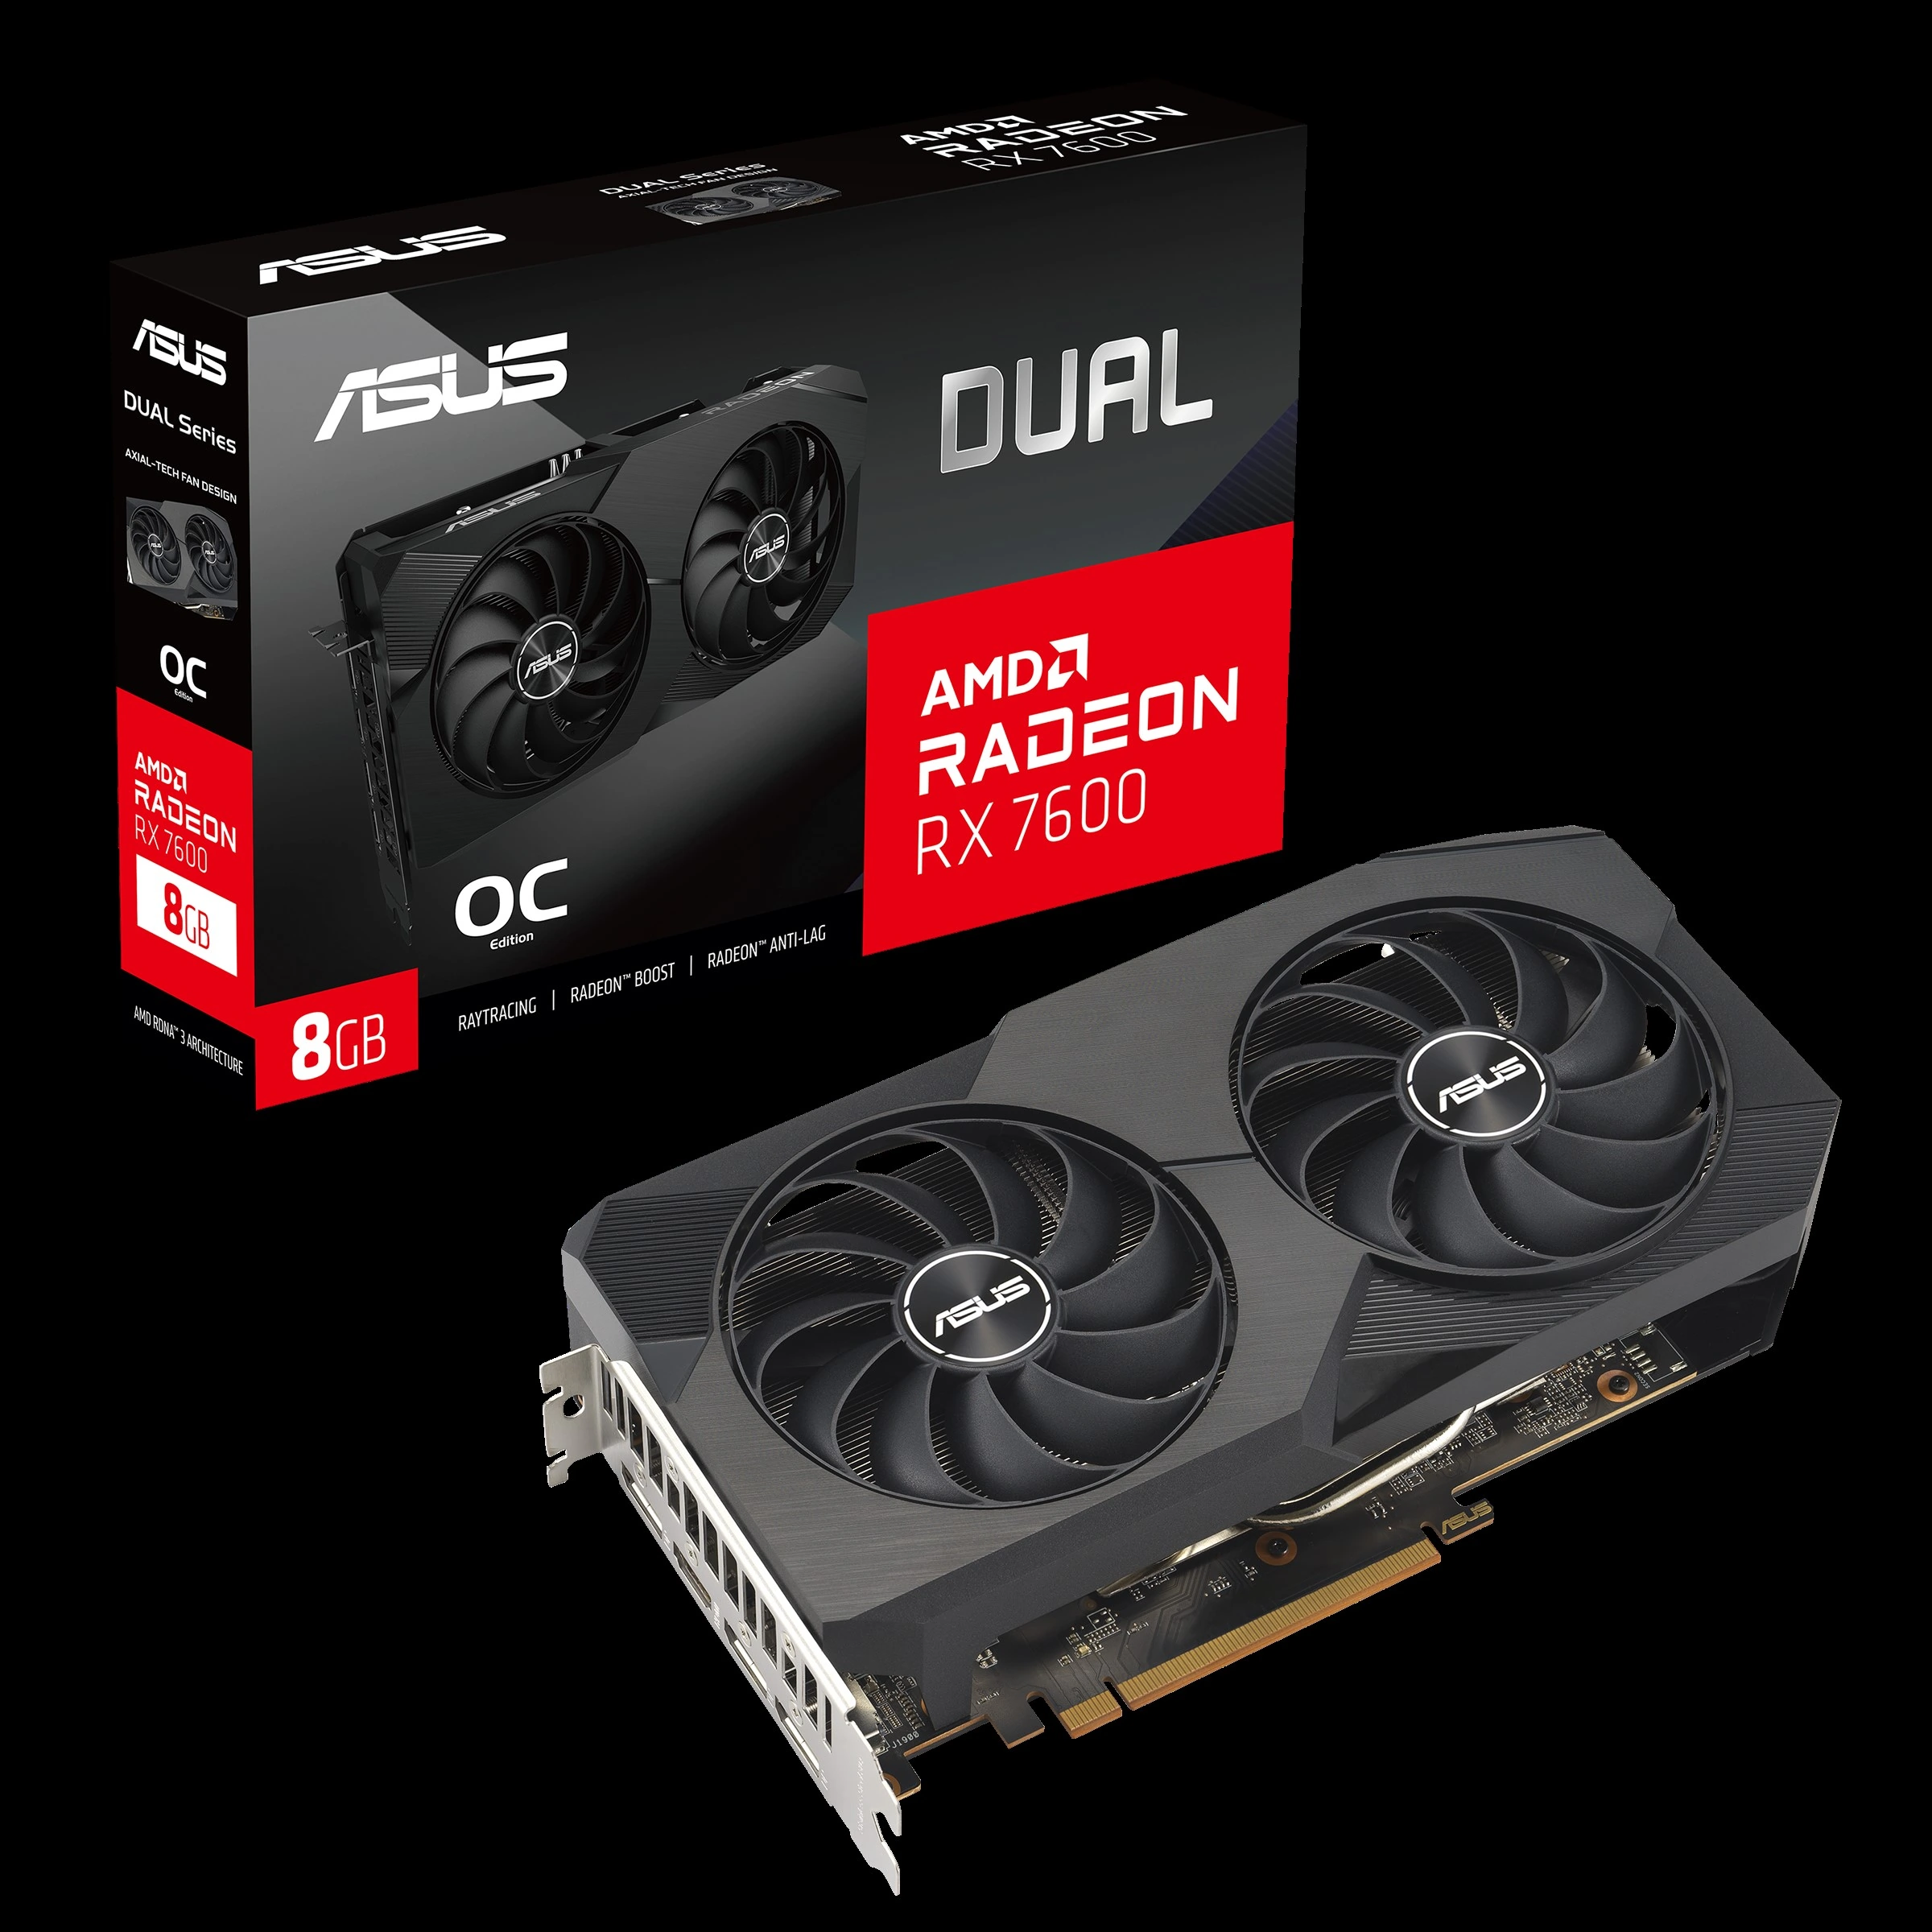 ASUS Releases ROG STRIX & DUAL Radeon RX 7600 GPUs 35